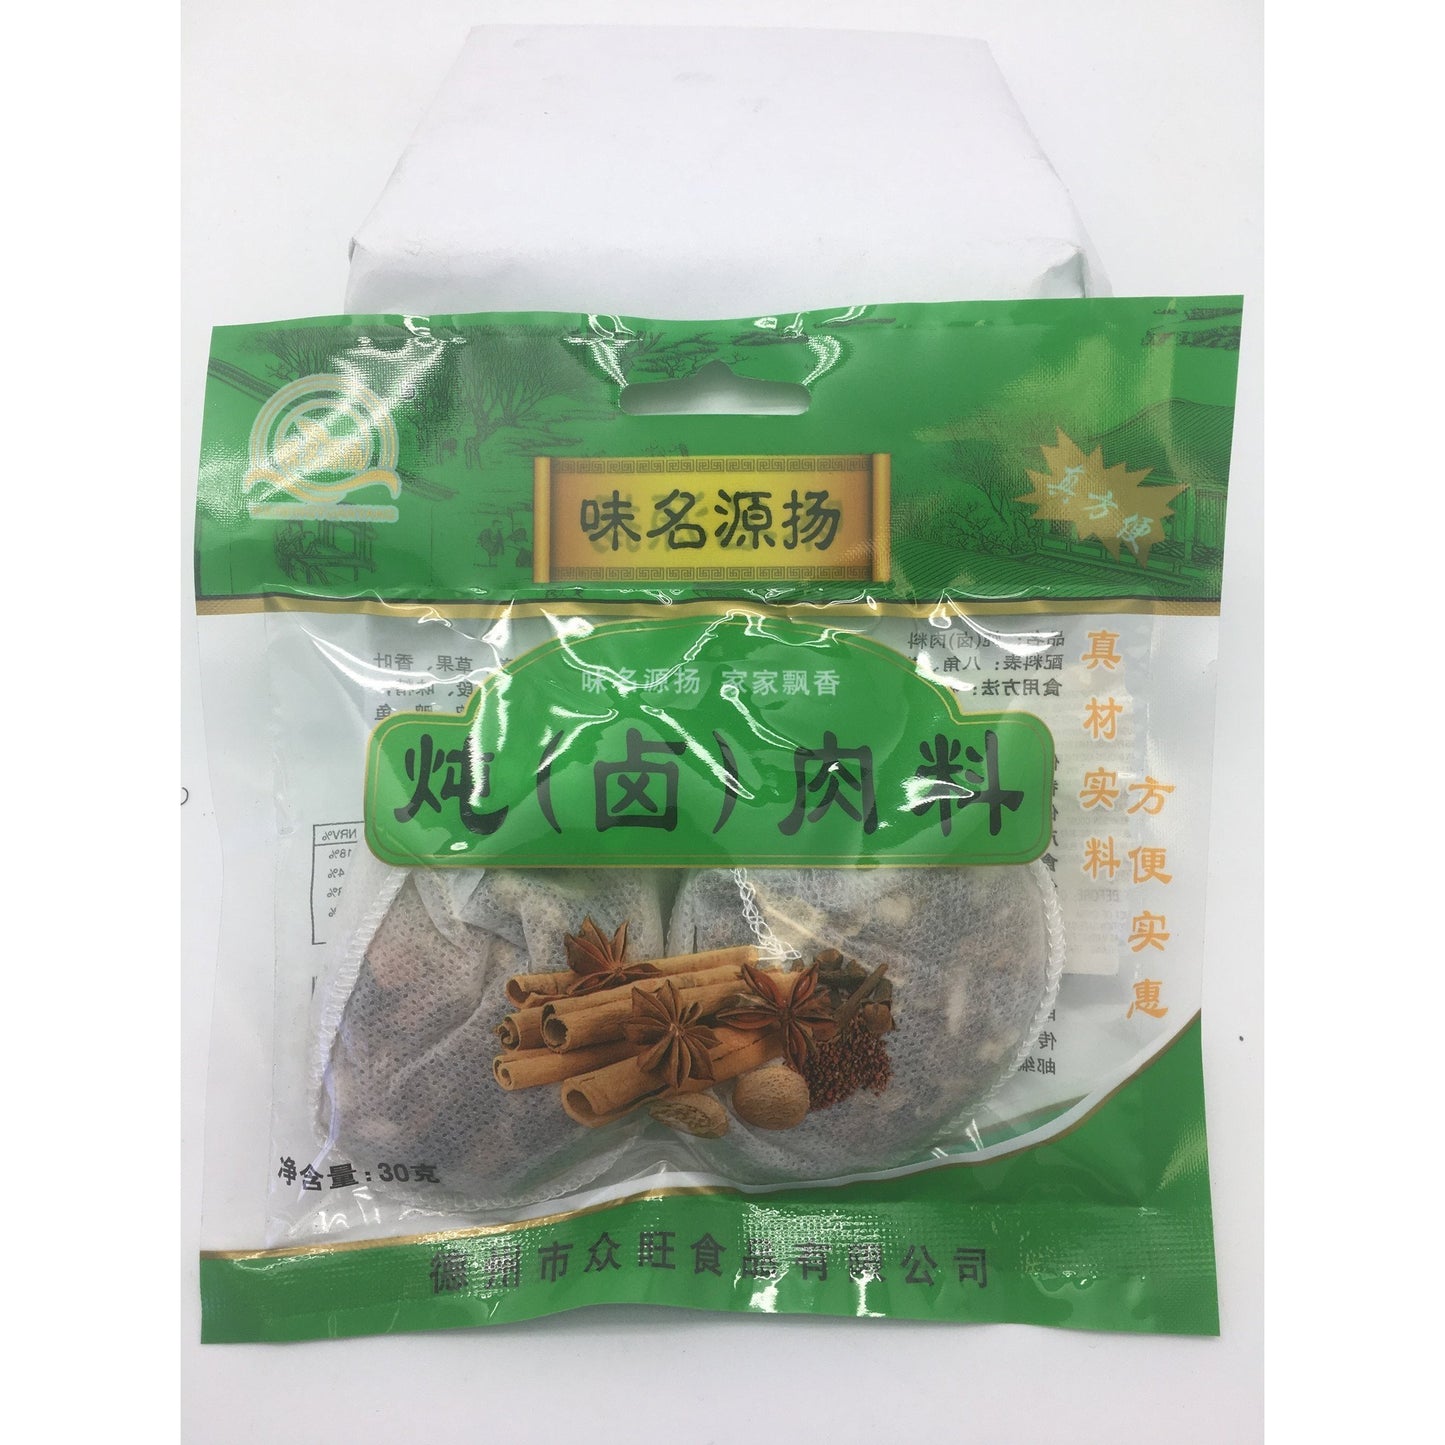 PD023M Wei Ming Yuan Yang Brand - soup mix 30g - 100 bags / 1 CTN - New Eastland Pty Ltd - Asian food wholesalers